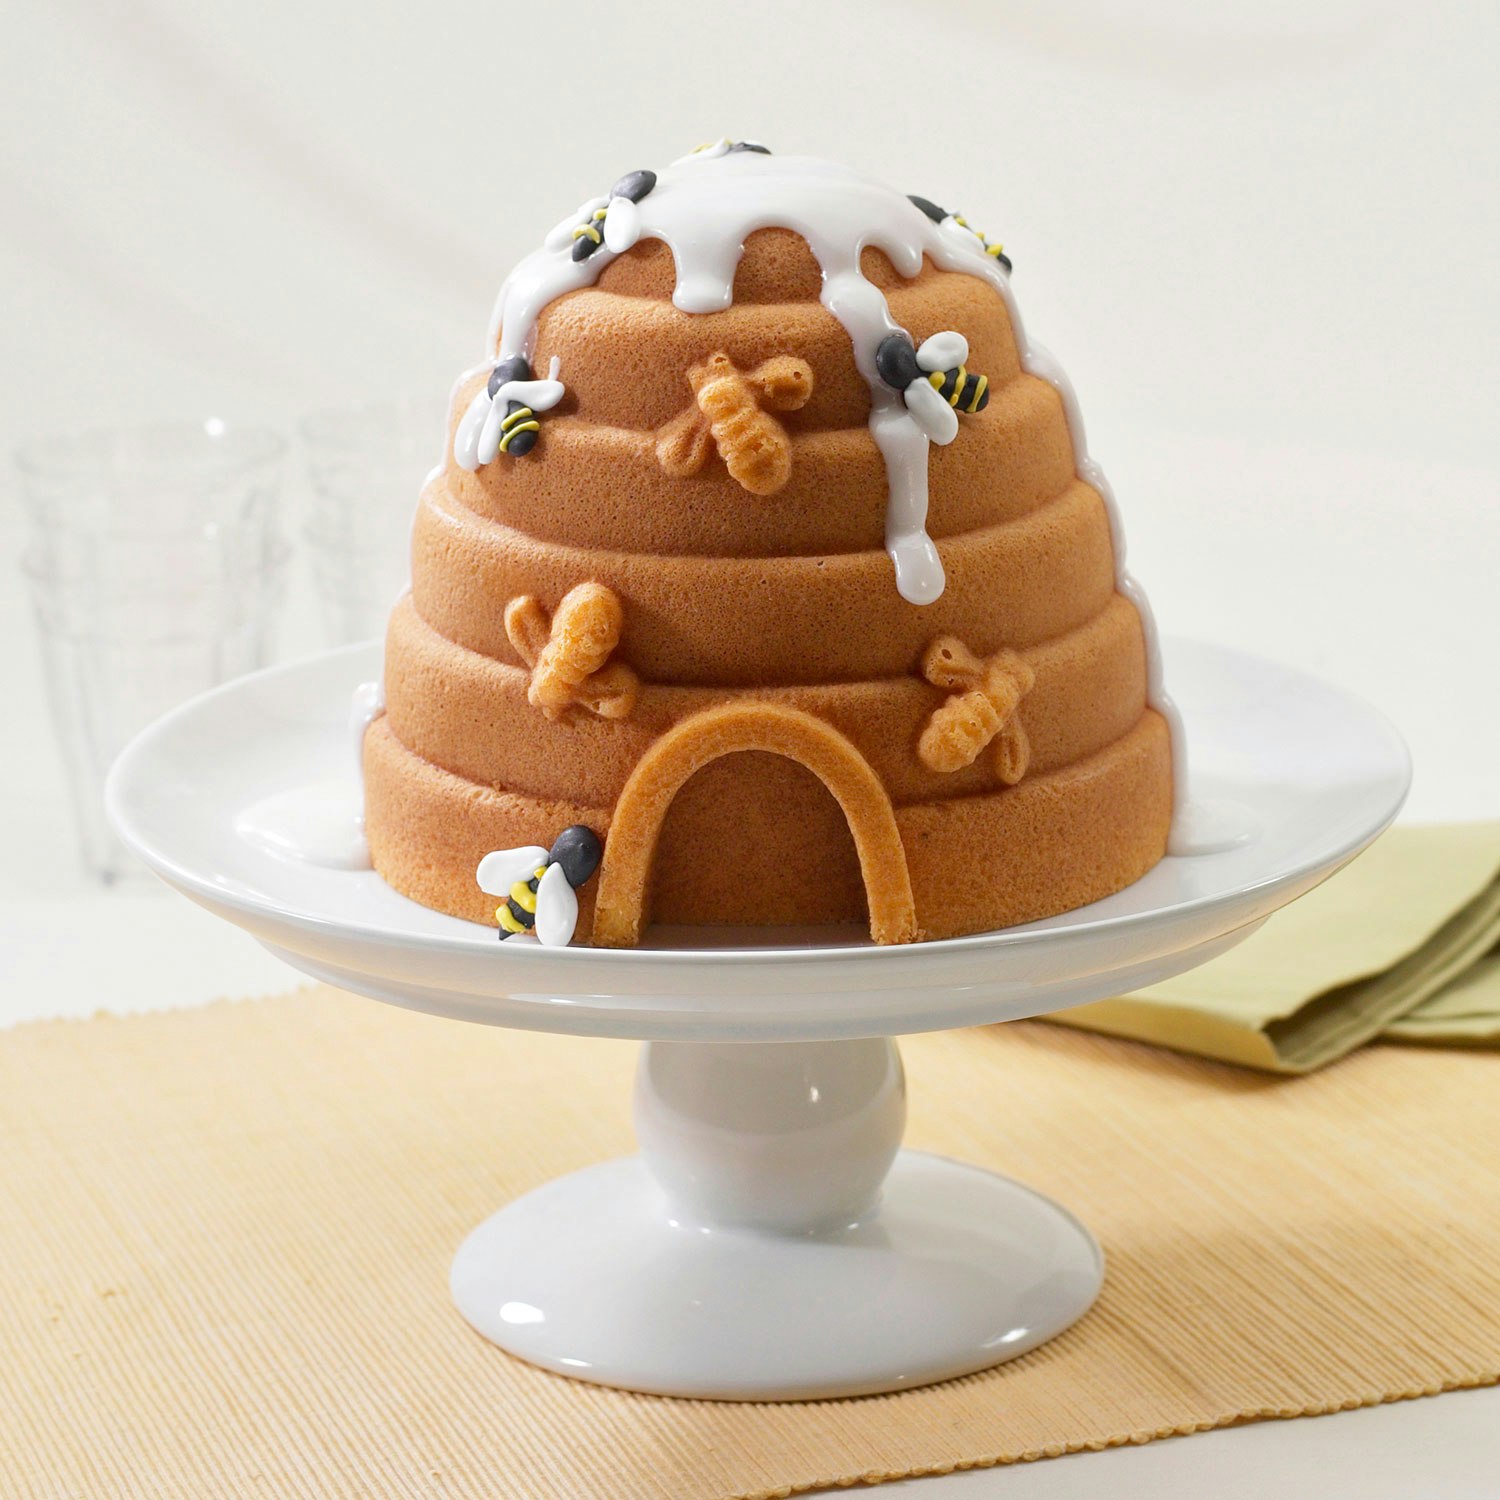 https://royaldesign.com/image/10/nordic-ware-nordic-ware-beehive-cake-bundt-pan-1